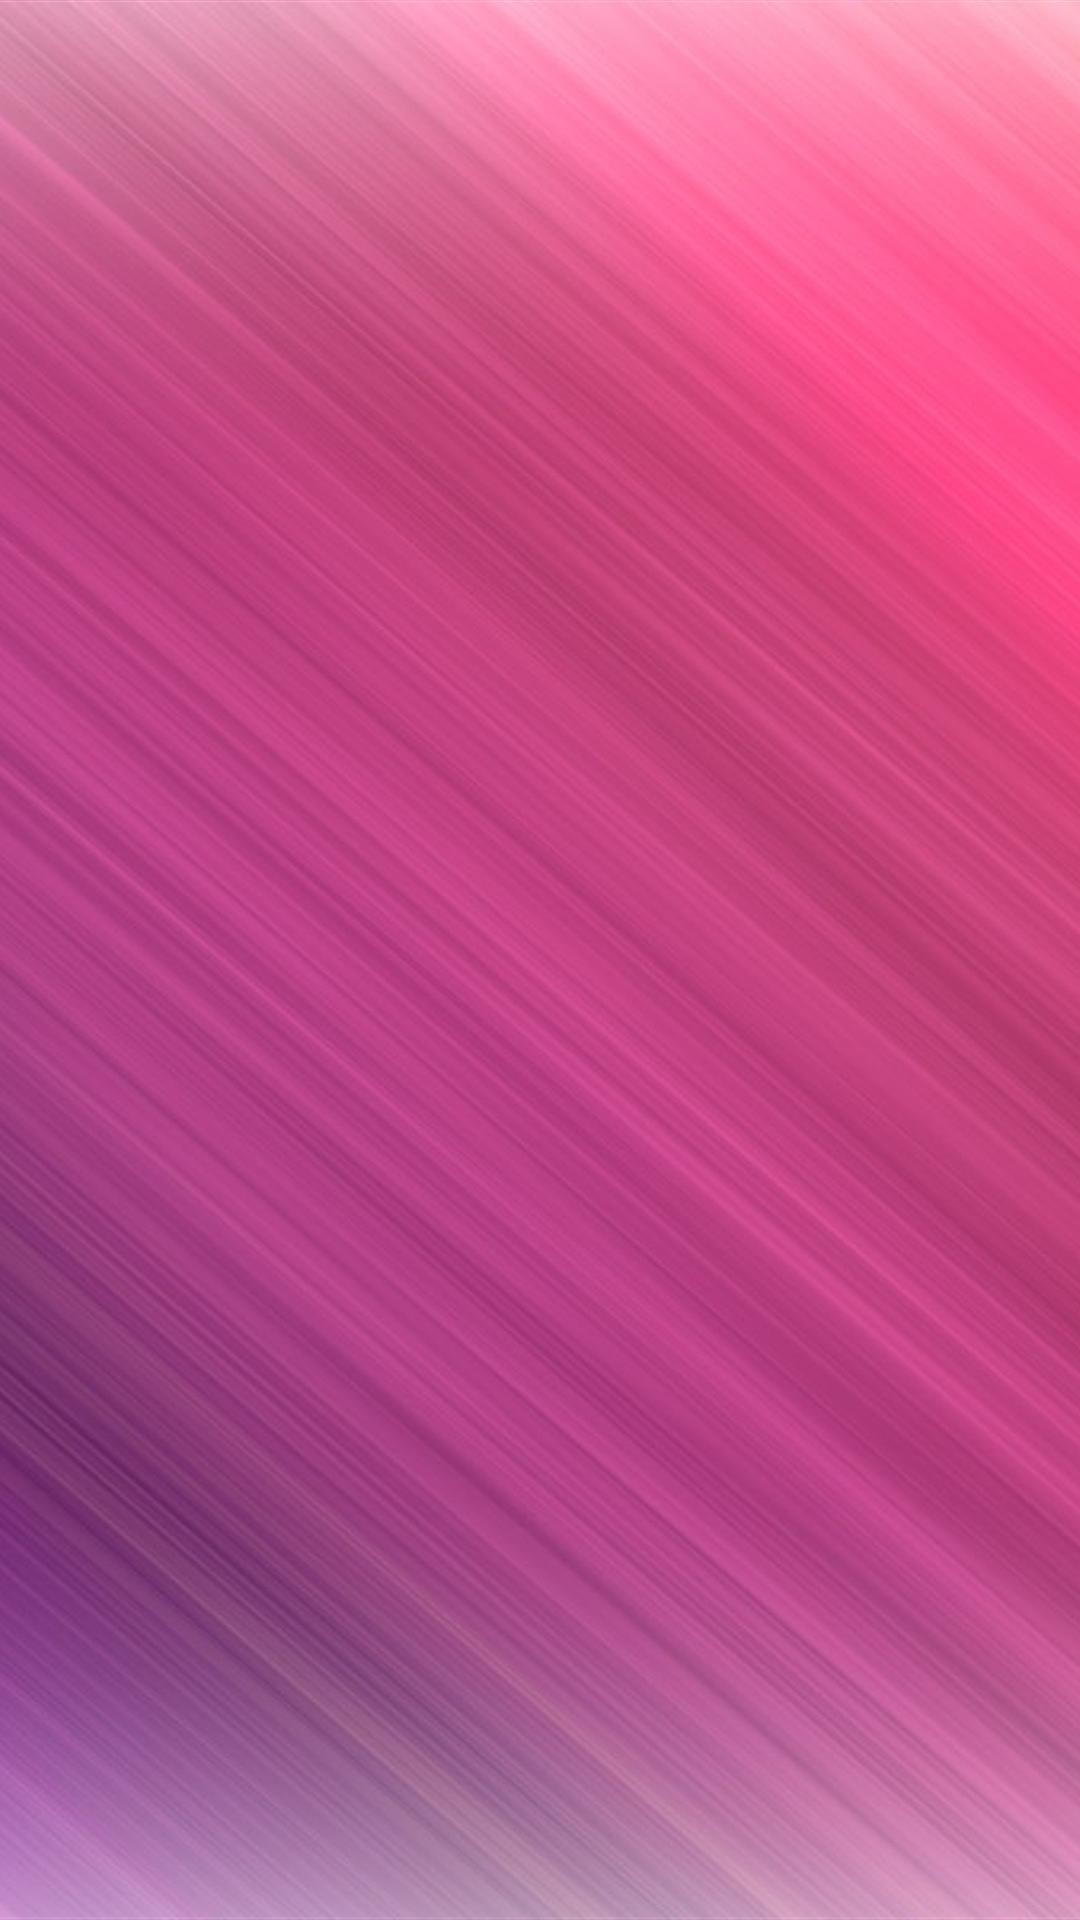 1080x1920 Pink wallpaper